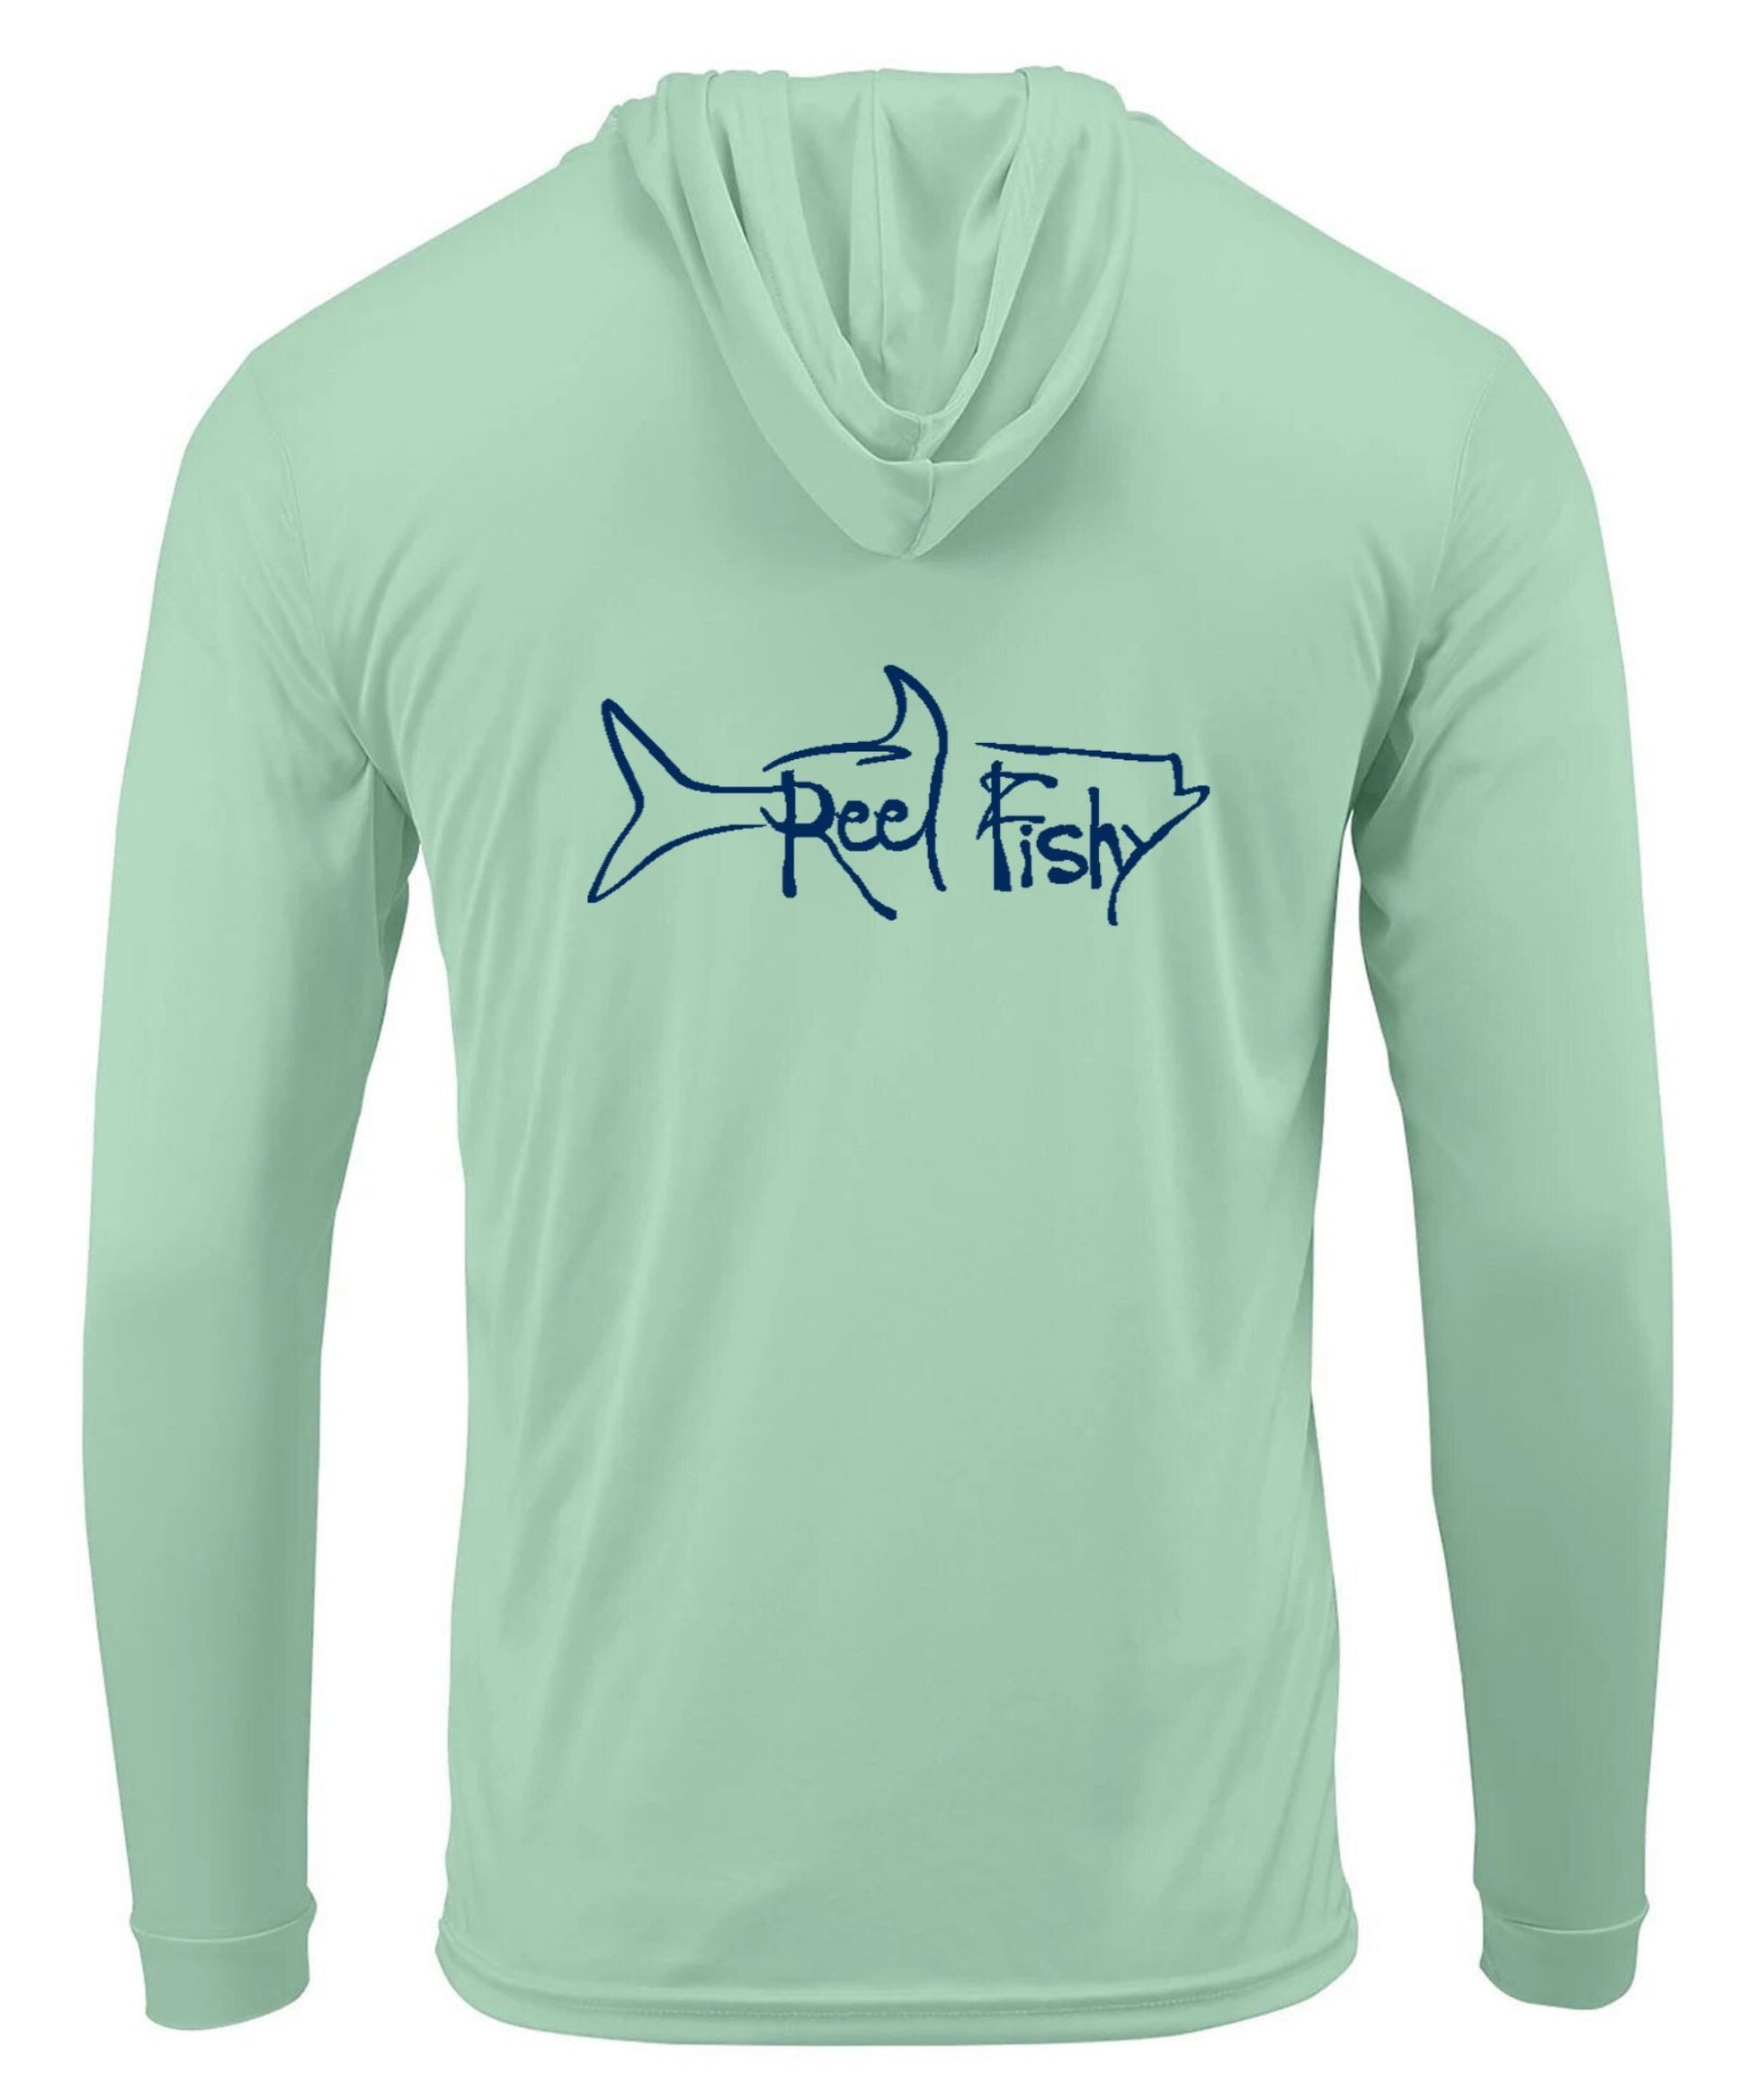 Tarpon Performance Hoodie Fishing Shirts, 50+UPF Sun Protection